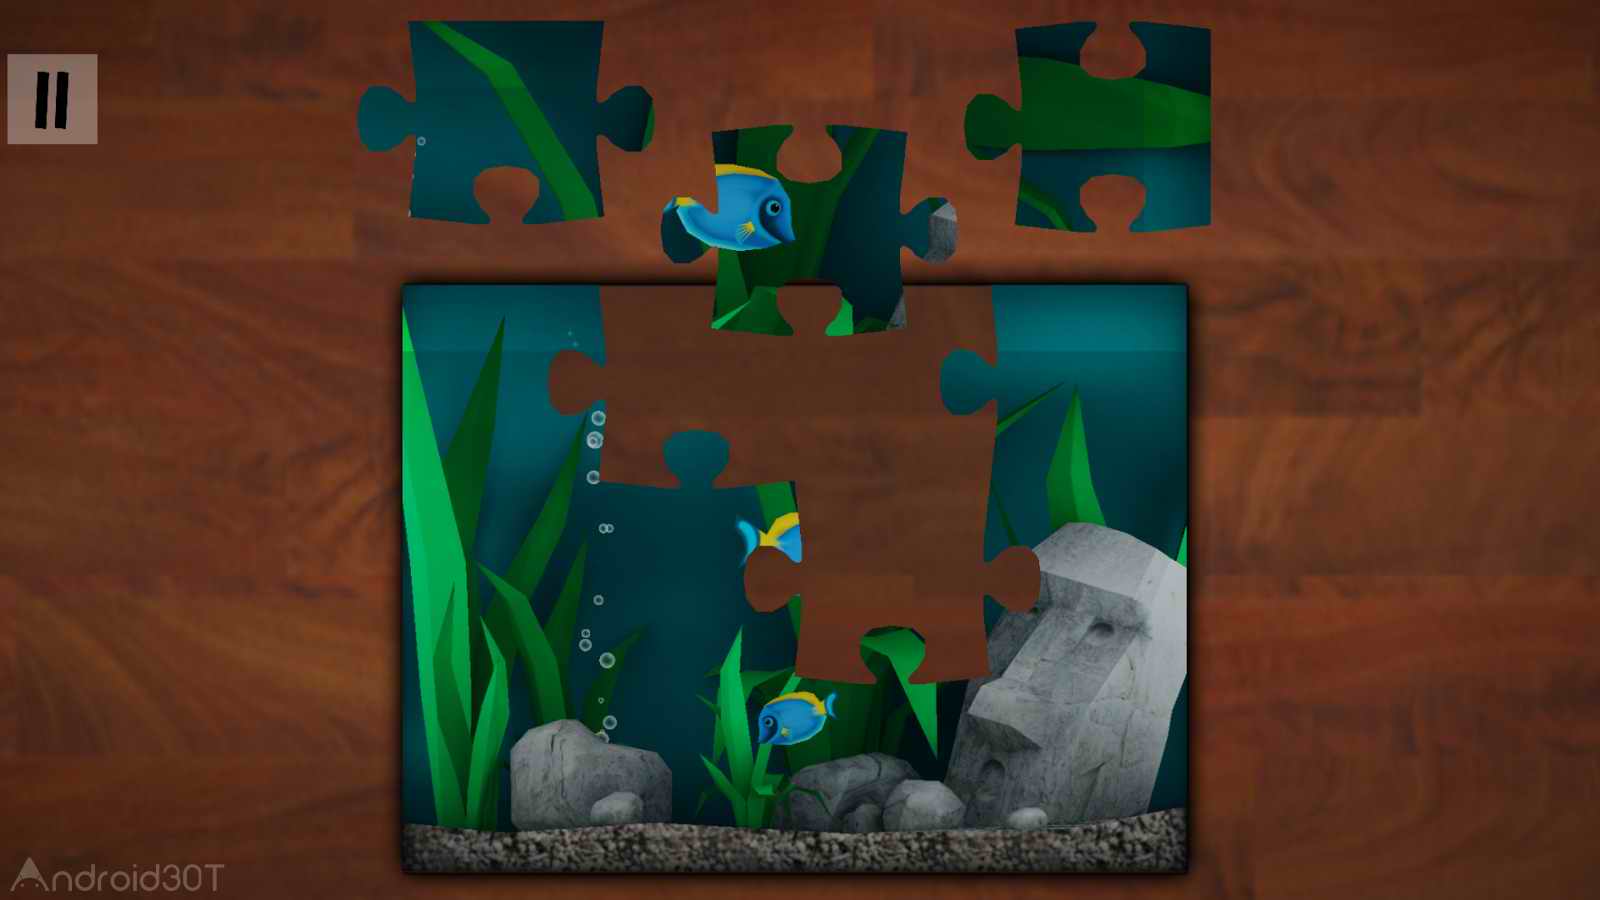 دانلود Jigsauce – 3D Jigsaw Puzzles 1.0 – بازی فکری جورچین اندروید